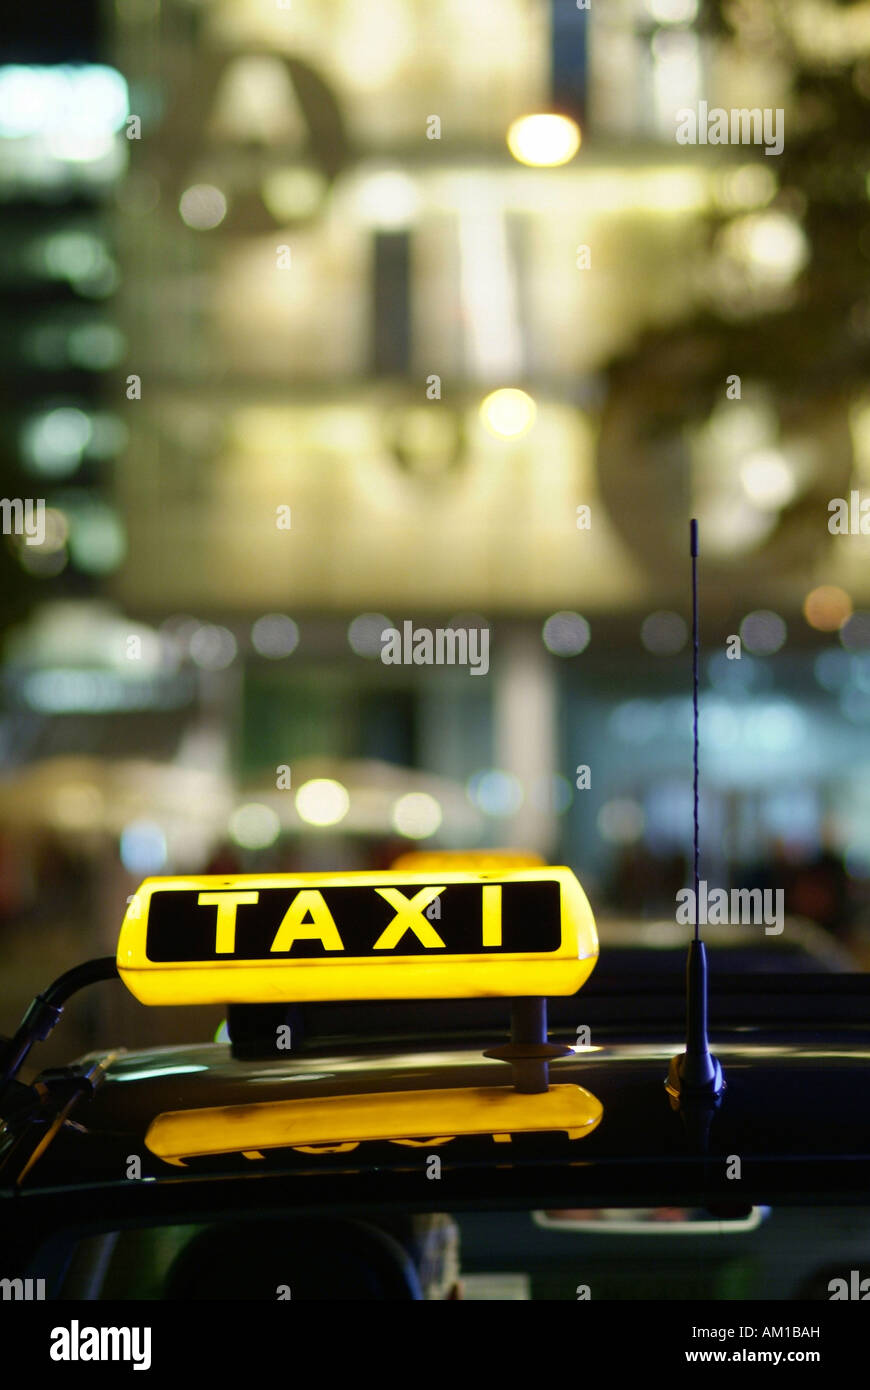 Taxi at night Stock Photo